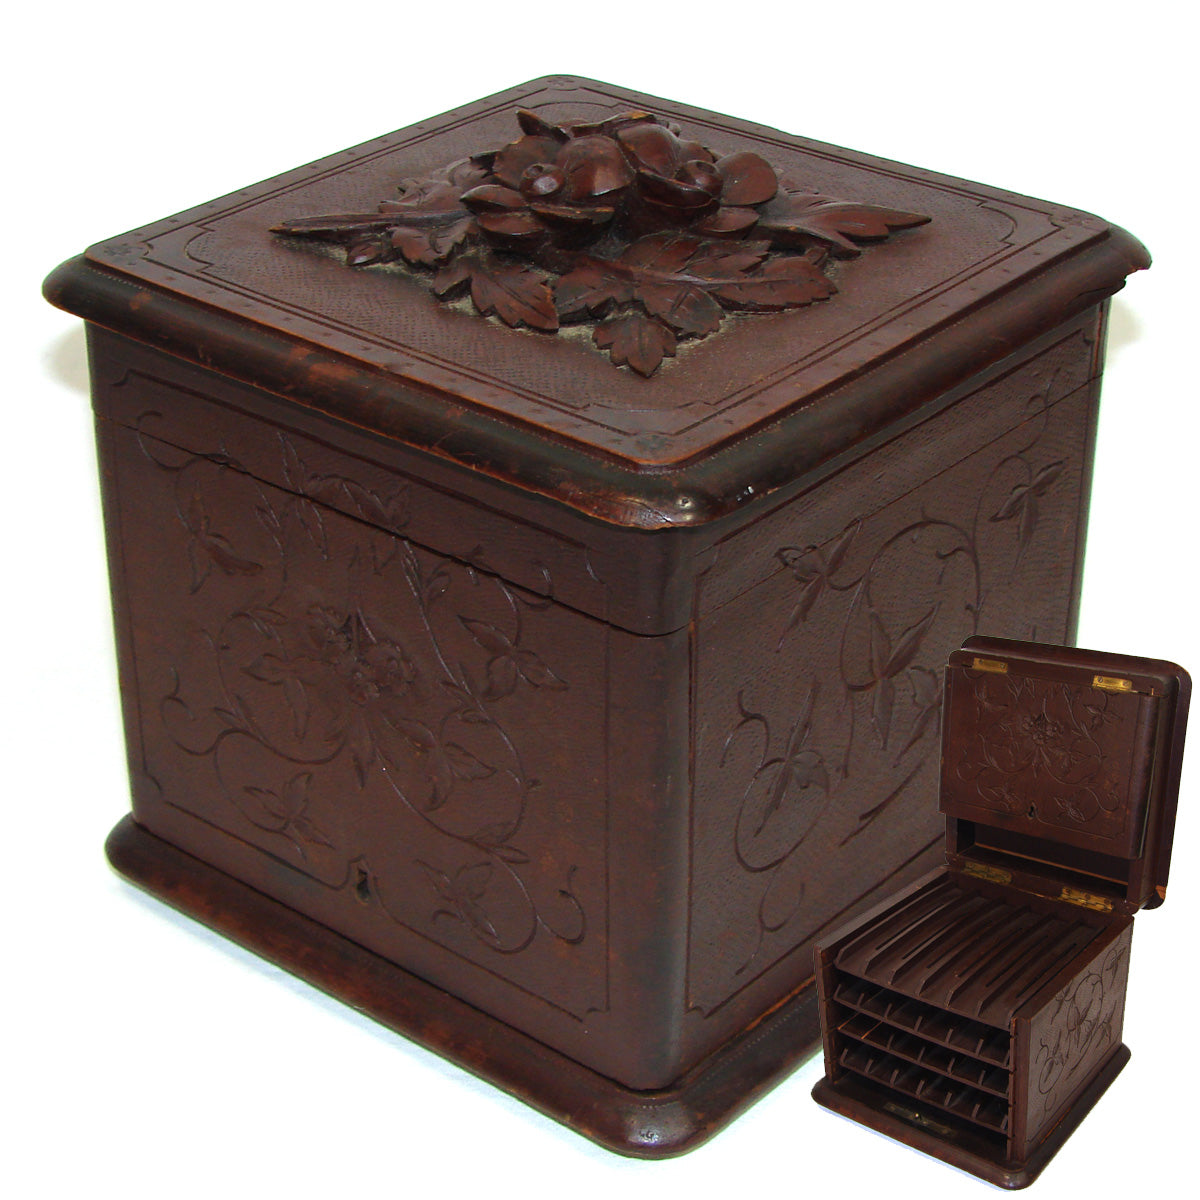 Fine Antique Victorian to Edwardian Era Black Forest Carved Cigar Presenter, Box, Not Humidor